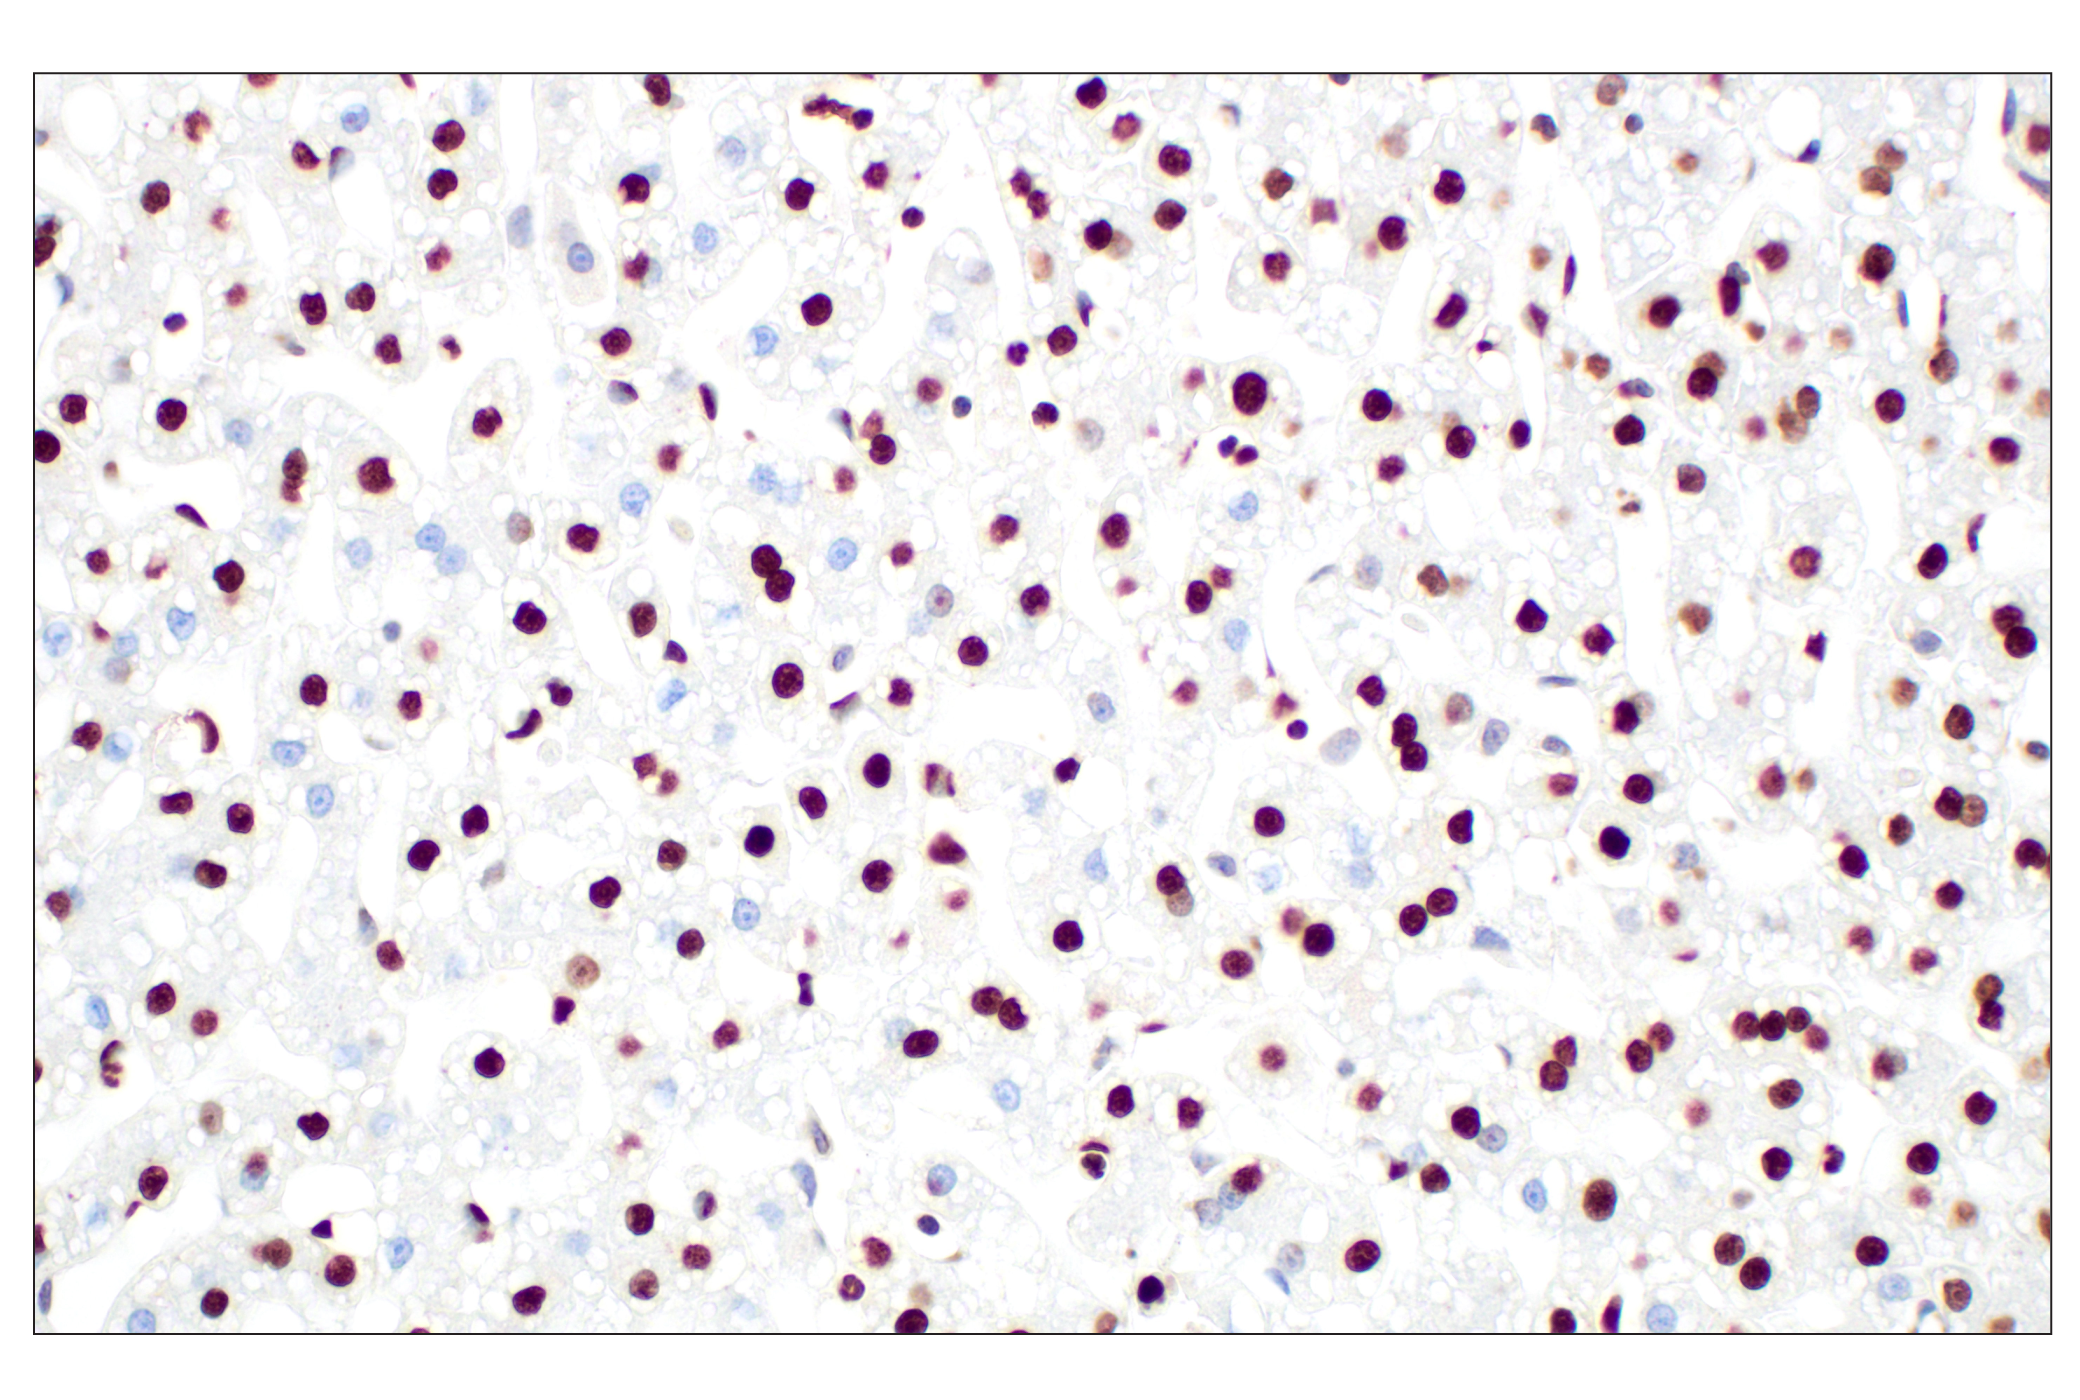  Image 38: Tri-Methyl Histone H3 Antibody Sampler Kit